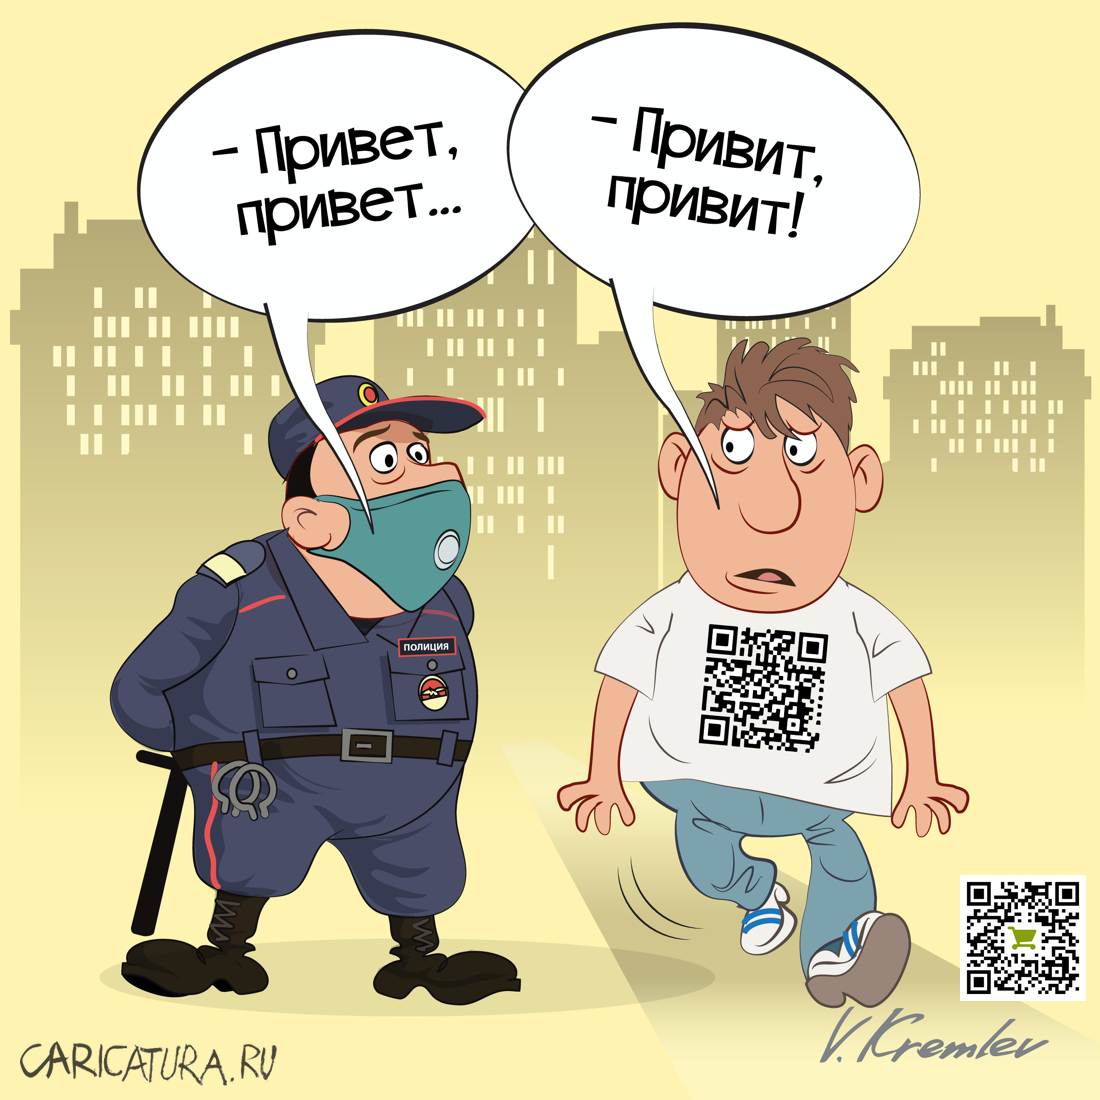 Карикатура "Привит!", Владимир Кремлёв